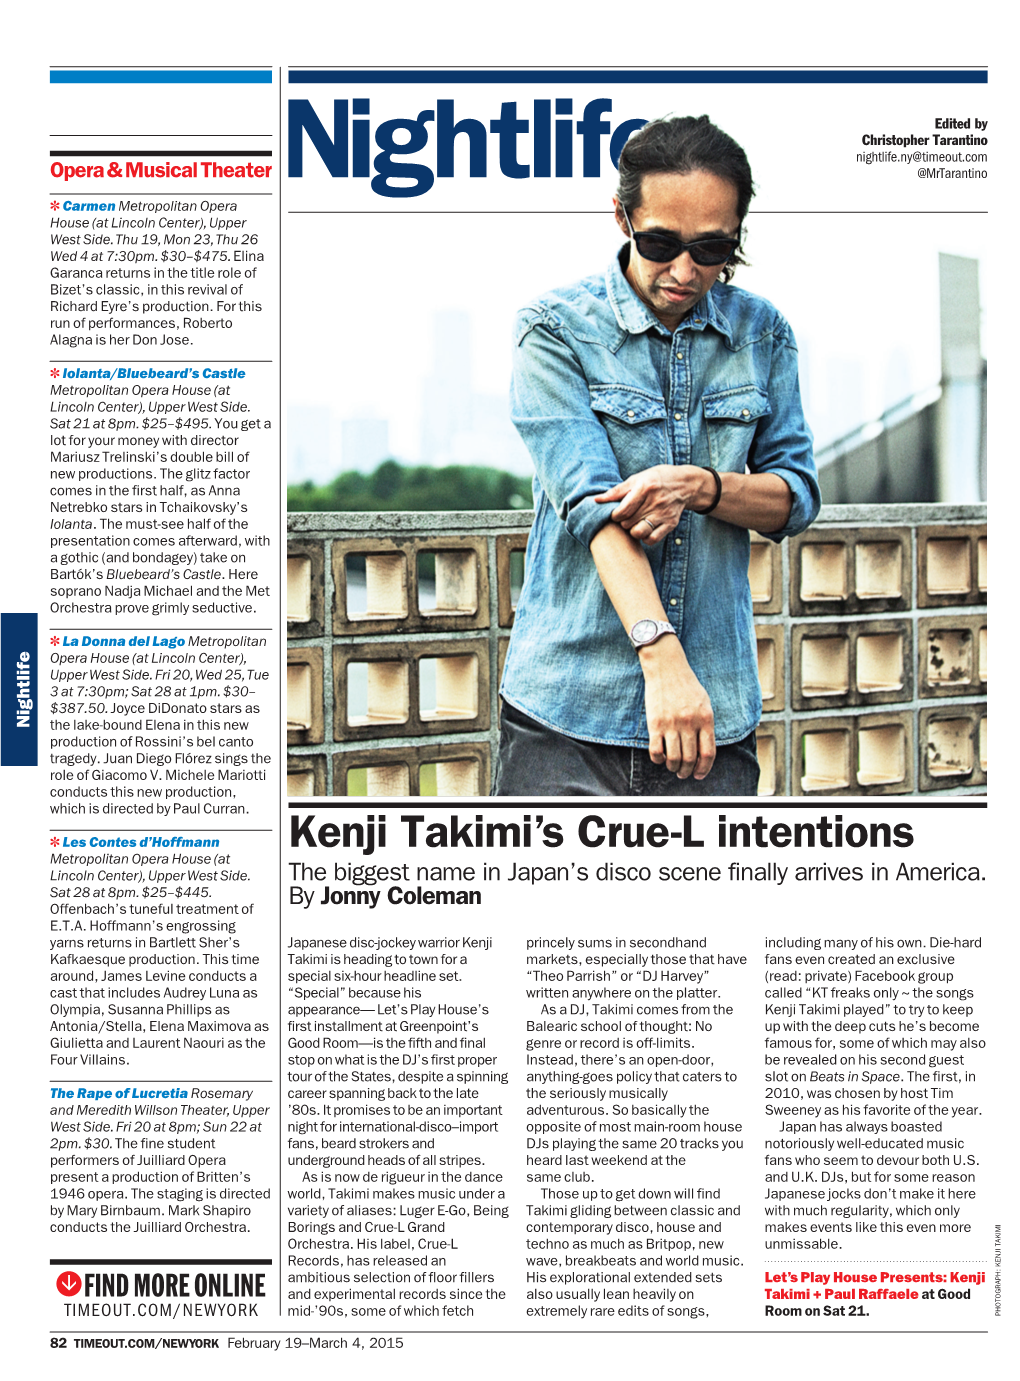 Kenji Takimi’S Intentions Crue-L Nightlife As Isnowderigueurinthedance Jonny Coleman